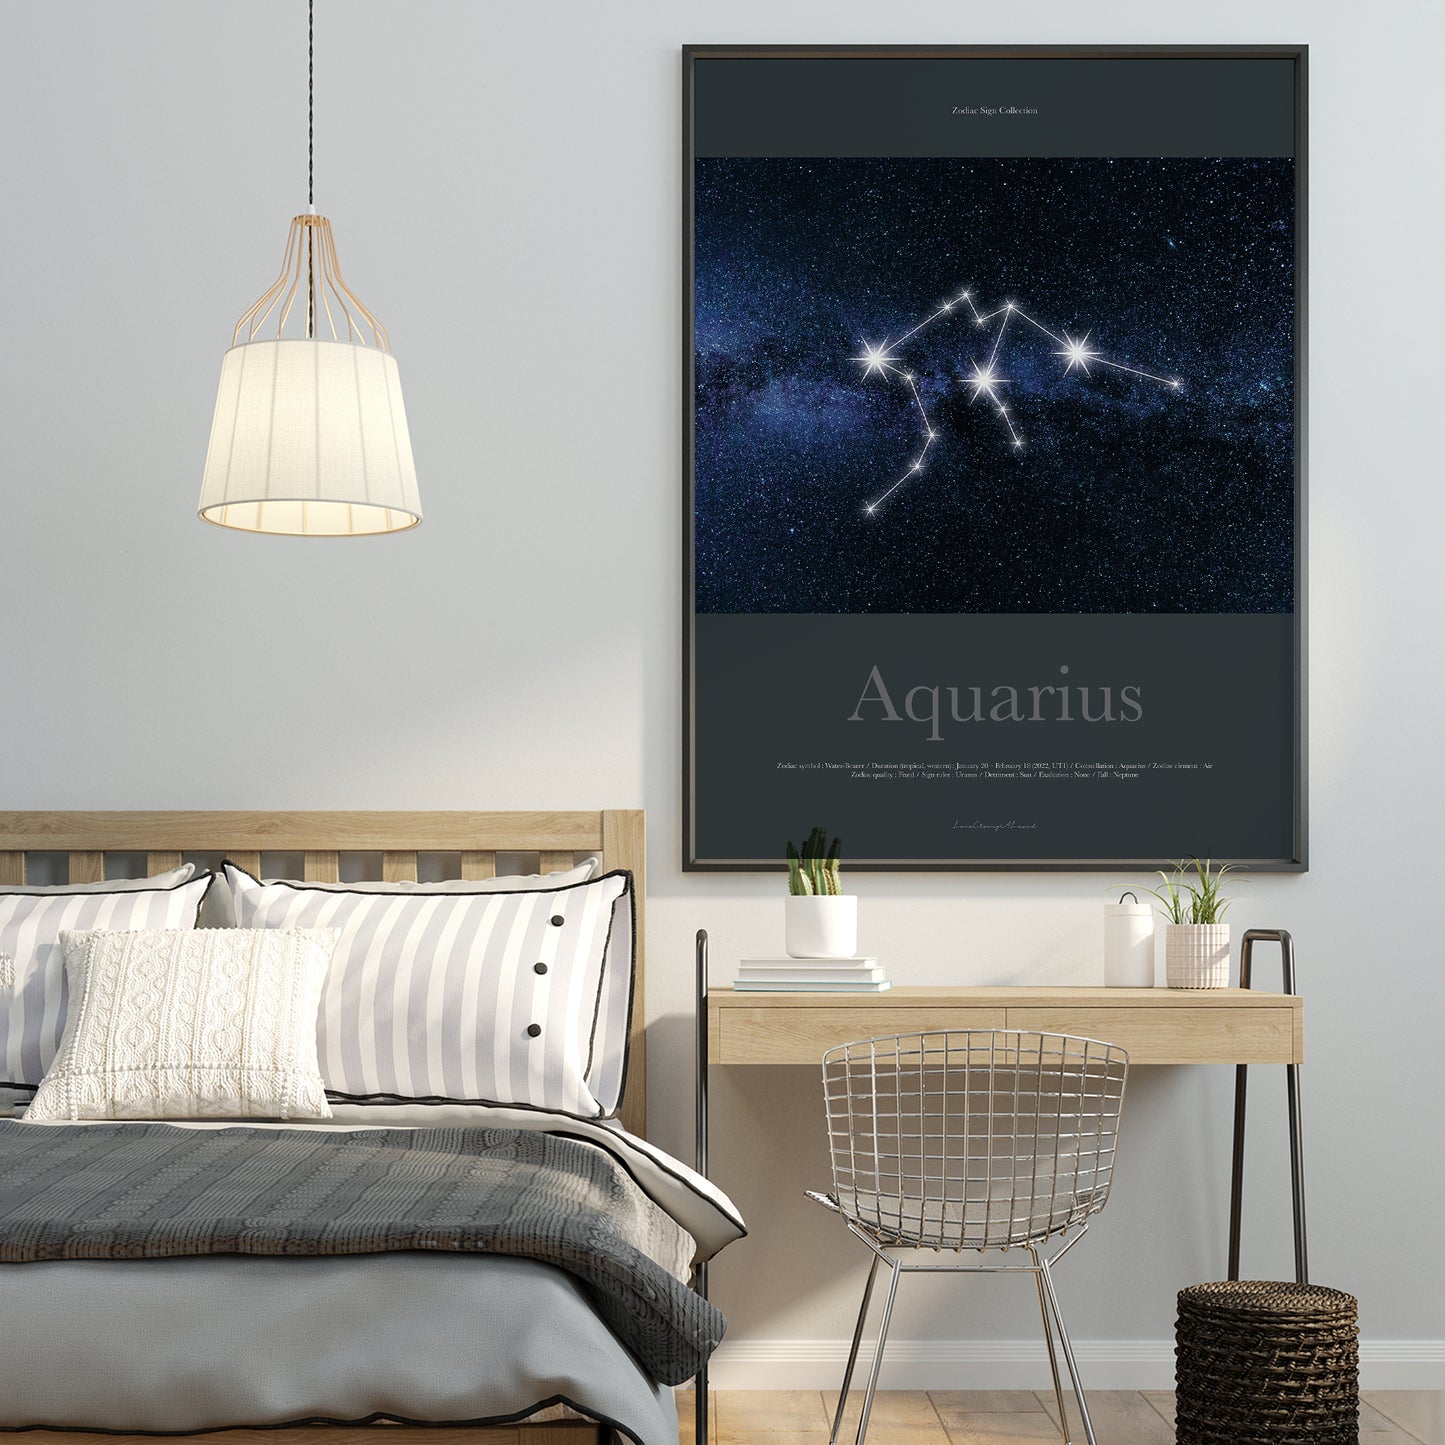 Zodiac Sign Collection "Aquarius"